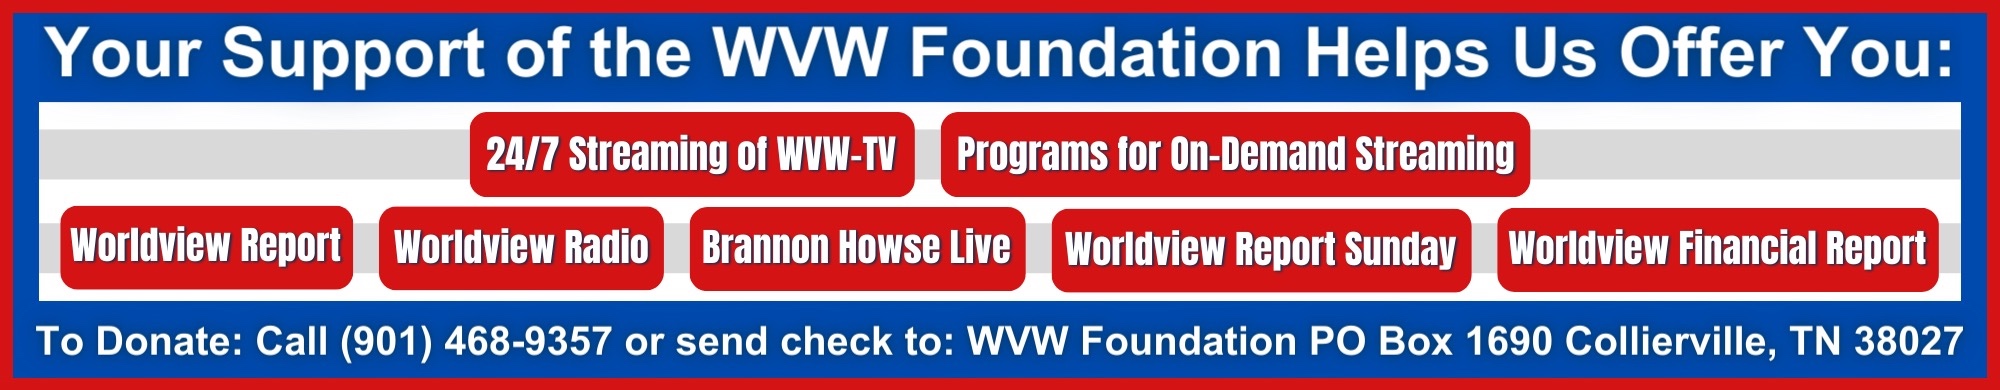 WVW Banner Donate Ad